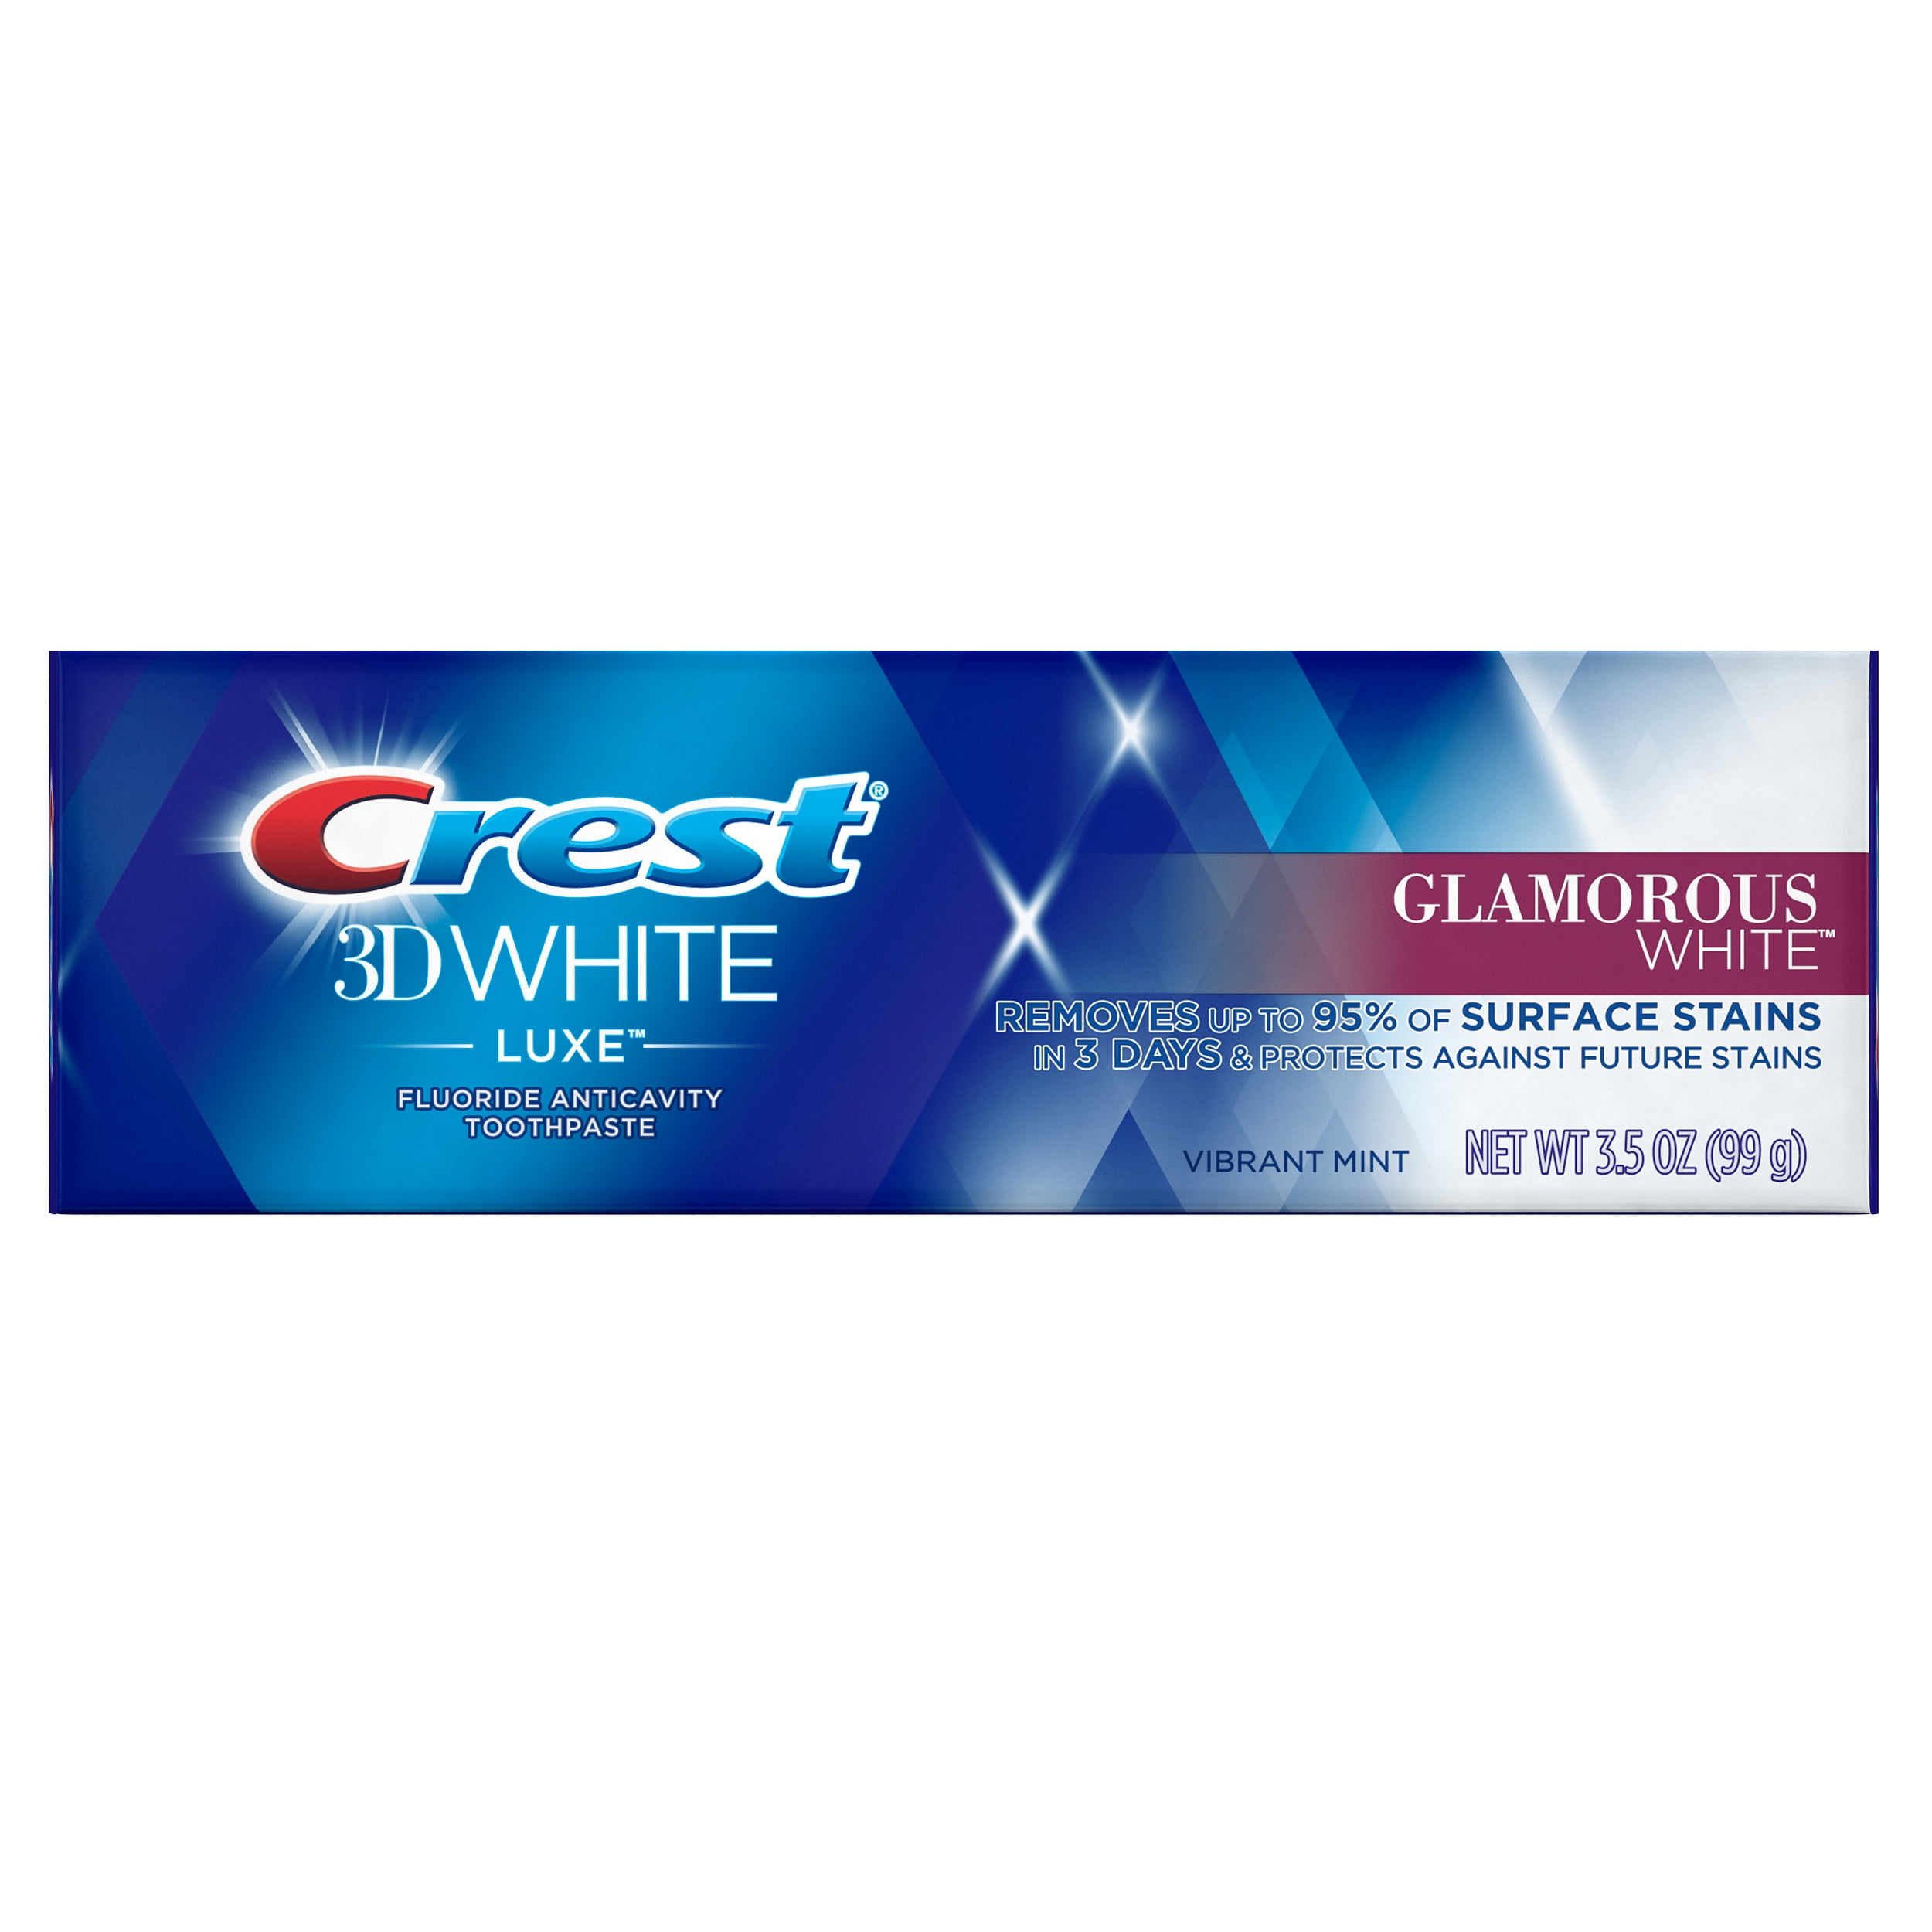 crest 3d white luxe glamorous white